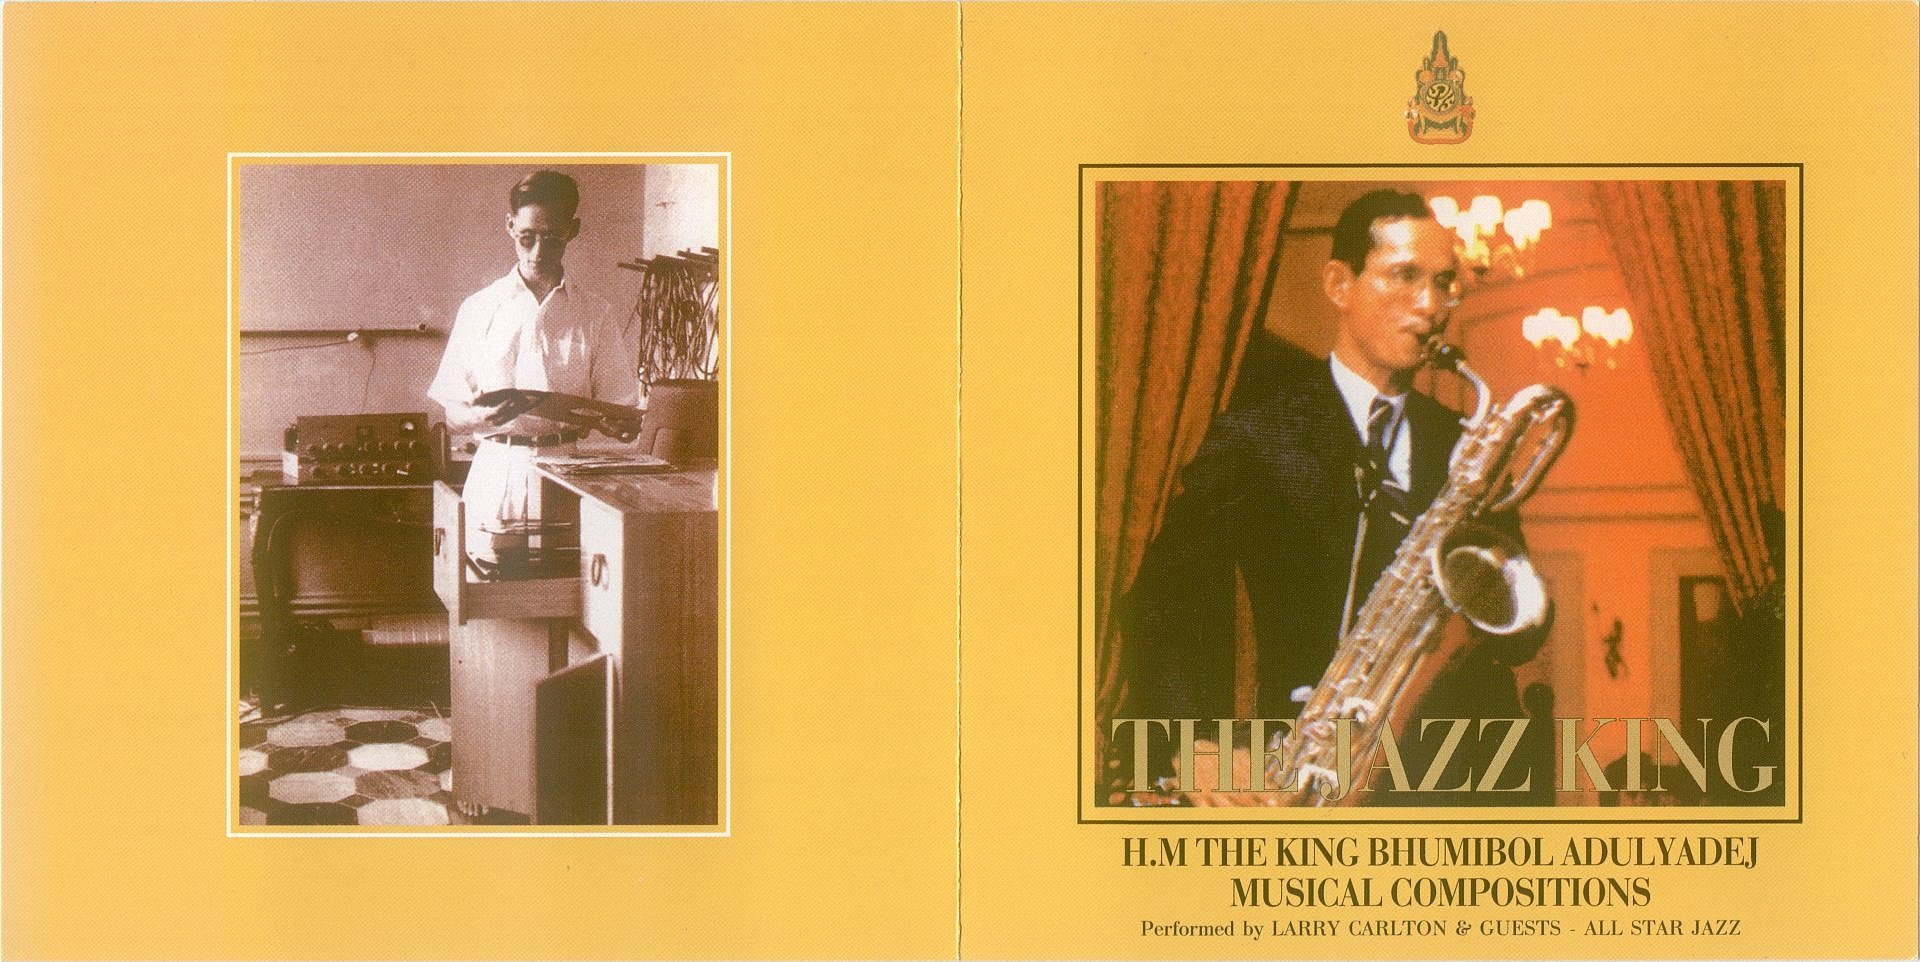 The Jazz King ที่สุดแห่งอัลบั้มเพลงพระราชนิพนธ์ที่เราอยากแนะนำให้คุณฟัง